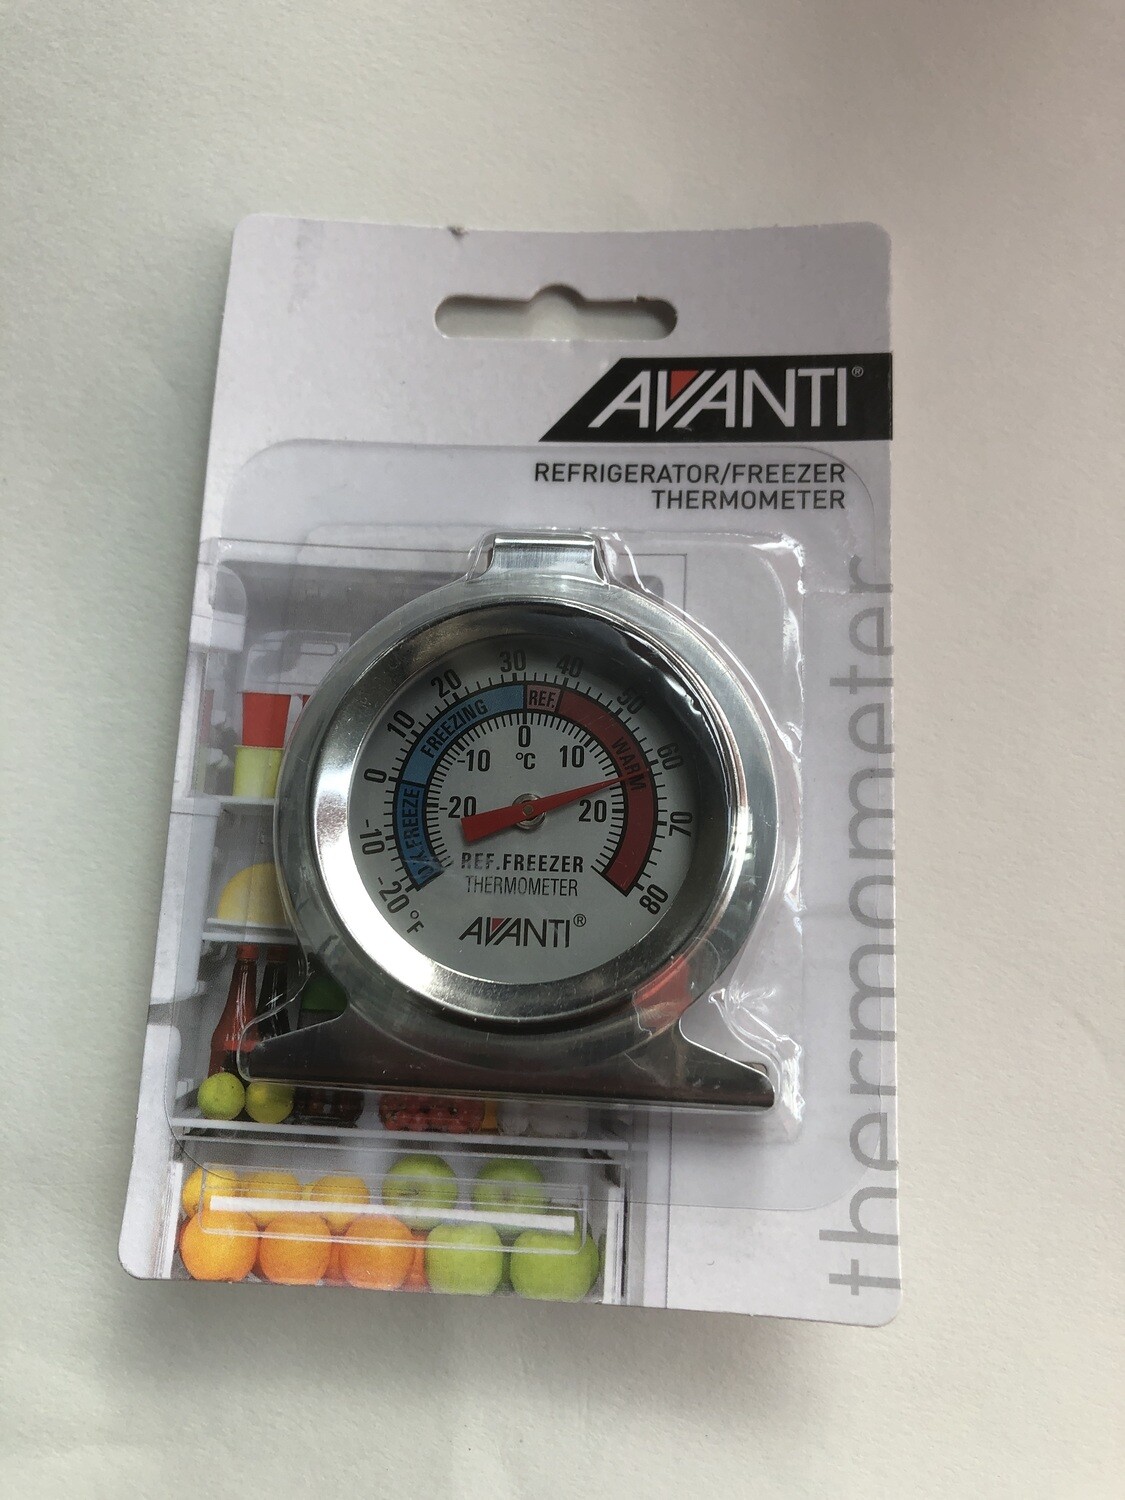 AVANTI - Refrigerator/Freezer Thermometer